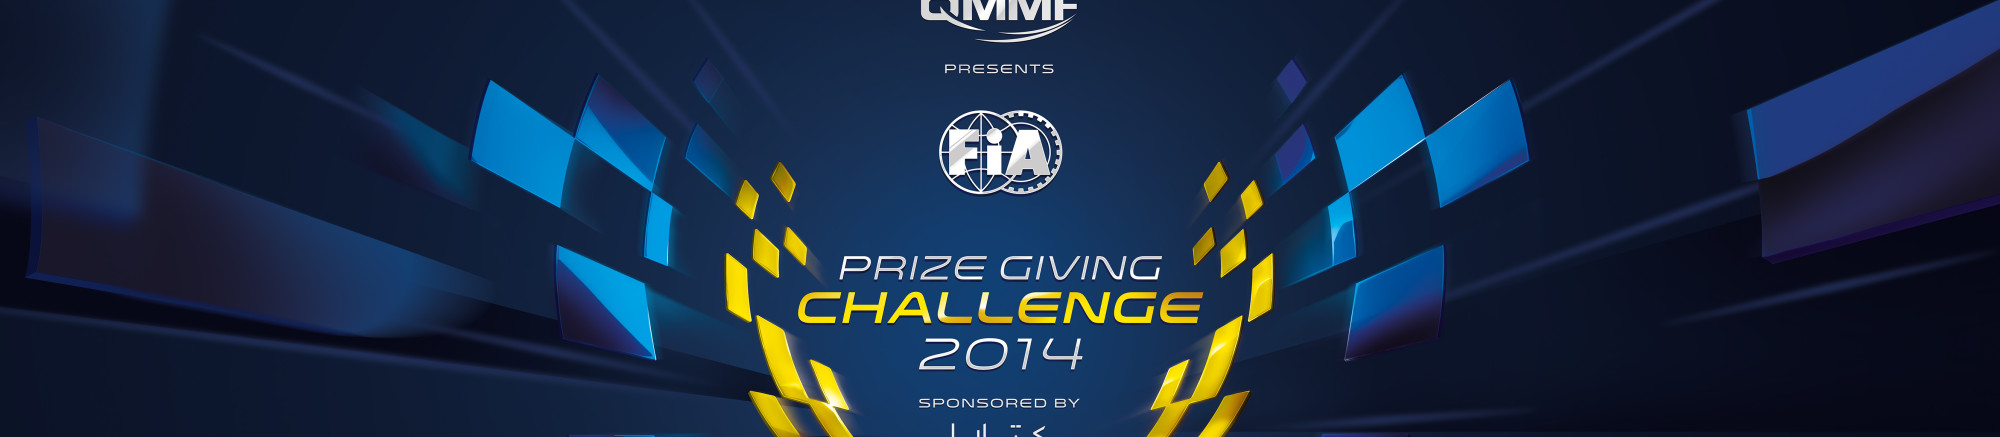 Prize Giving Challenge FIA